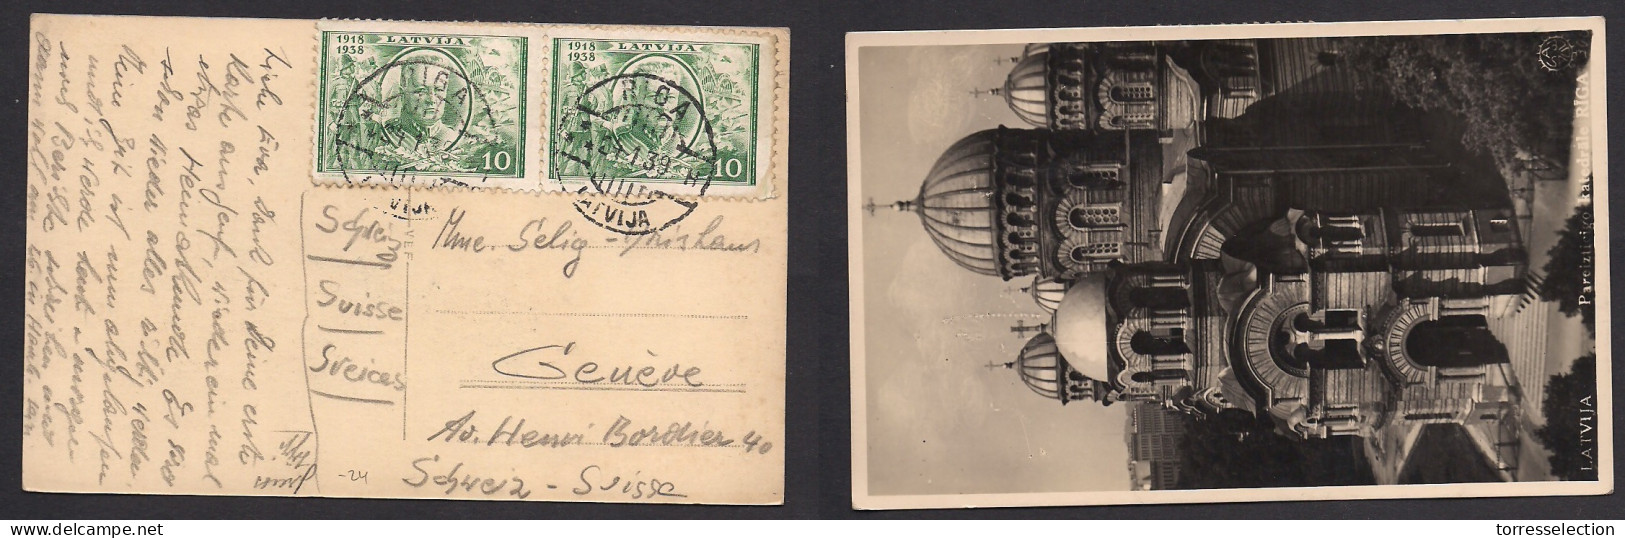 LATVIA. 1939 (24 Jan) Riga - Switzerland, Geneve. Multifkd Pcard. Fine Used. XSALE. - Lettonie